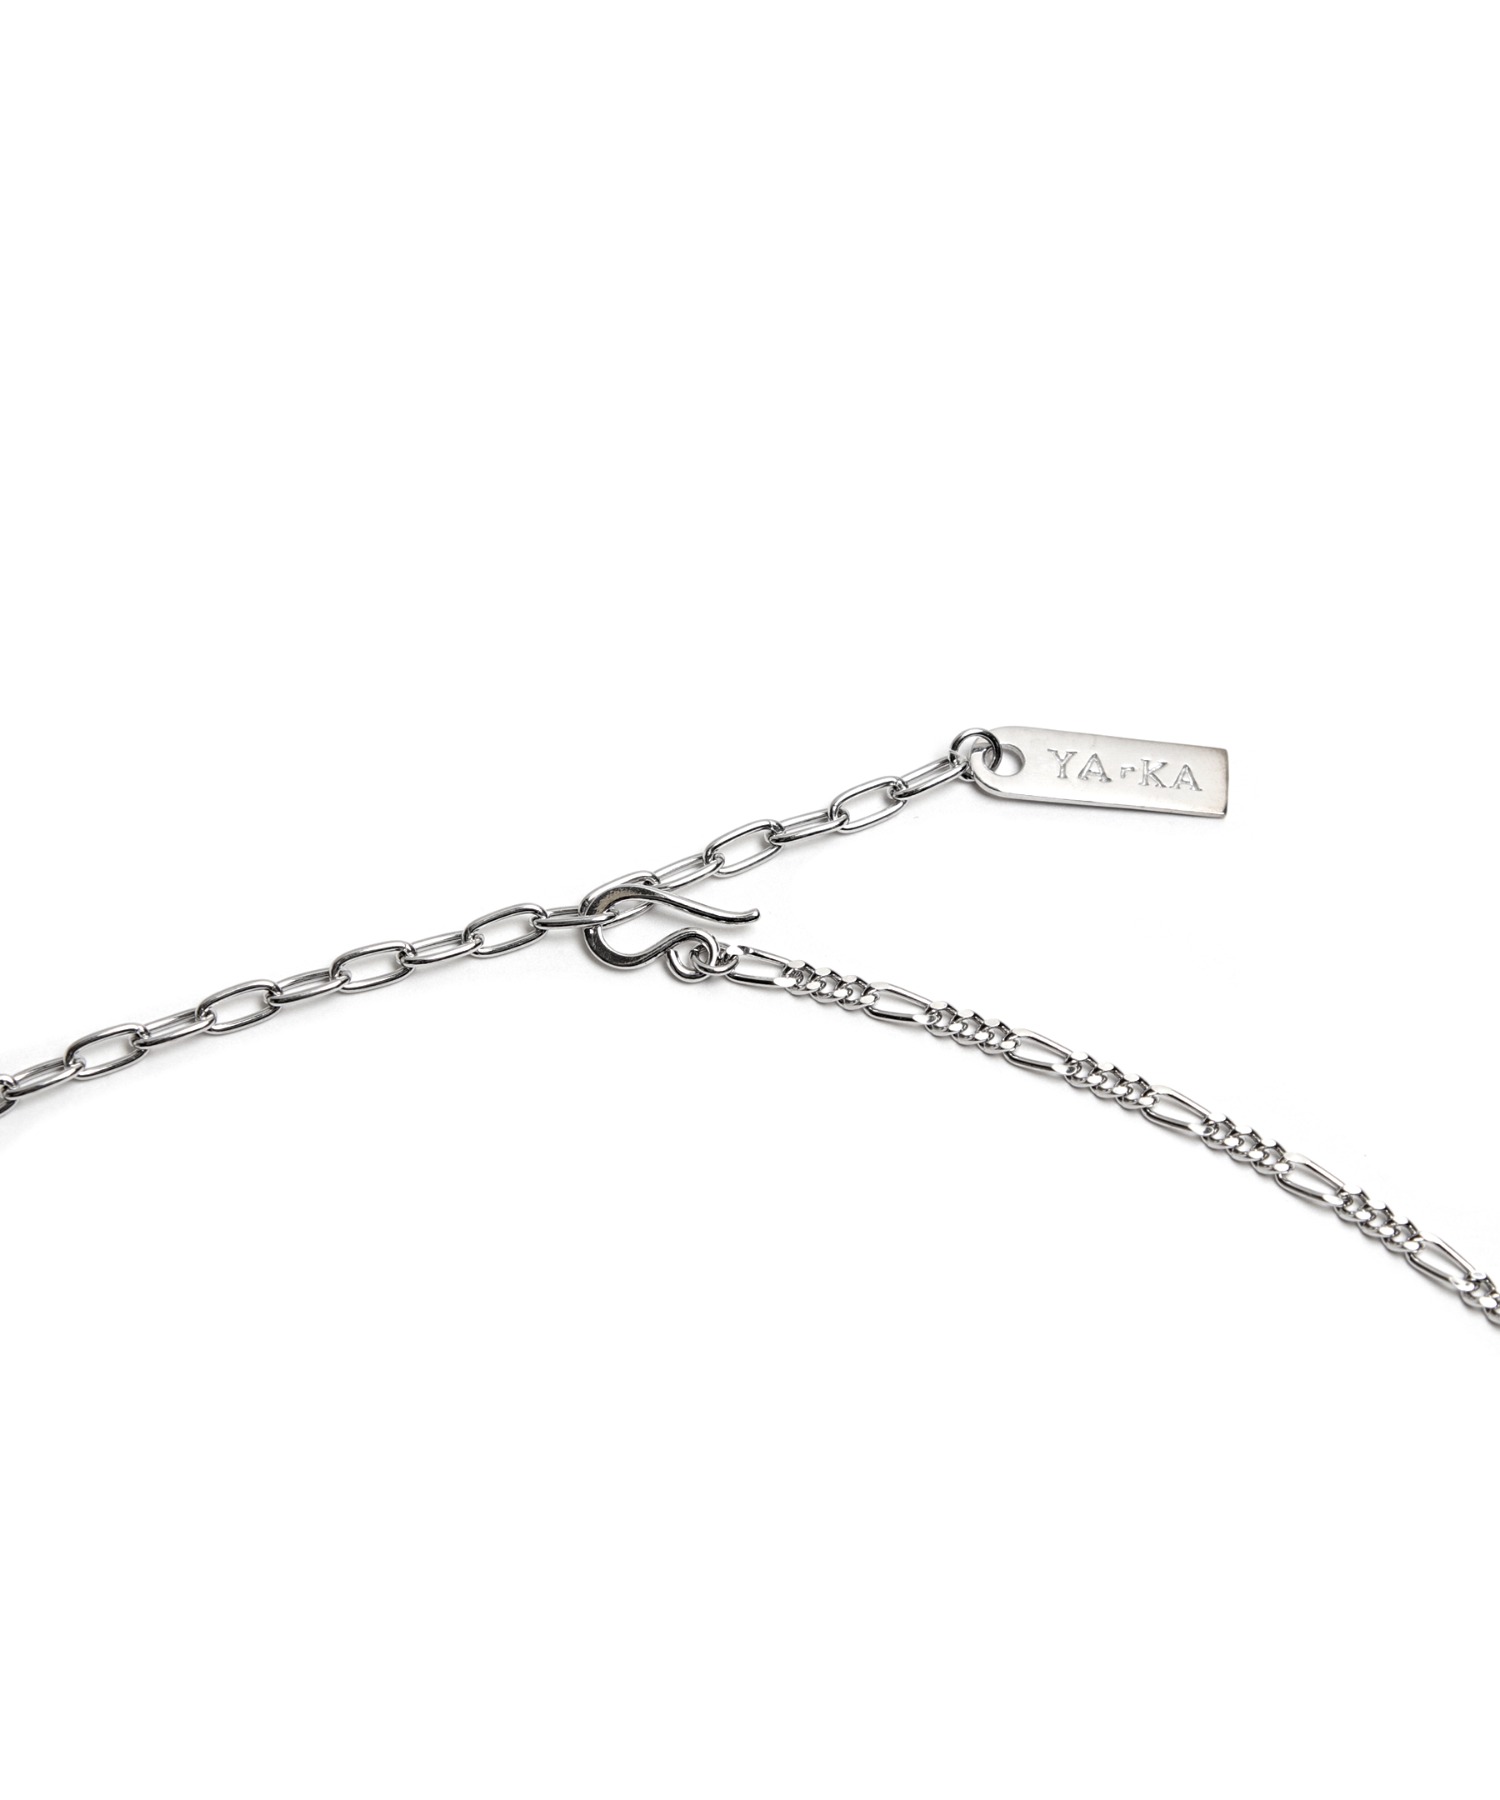 YArKA/ヤーカ】silver925 mix chain necklace [LBN3]/ミックスチェーン